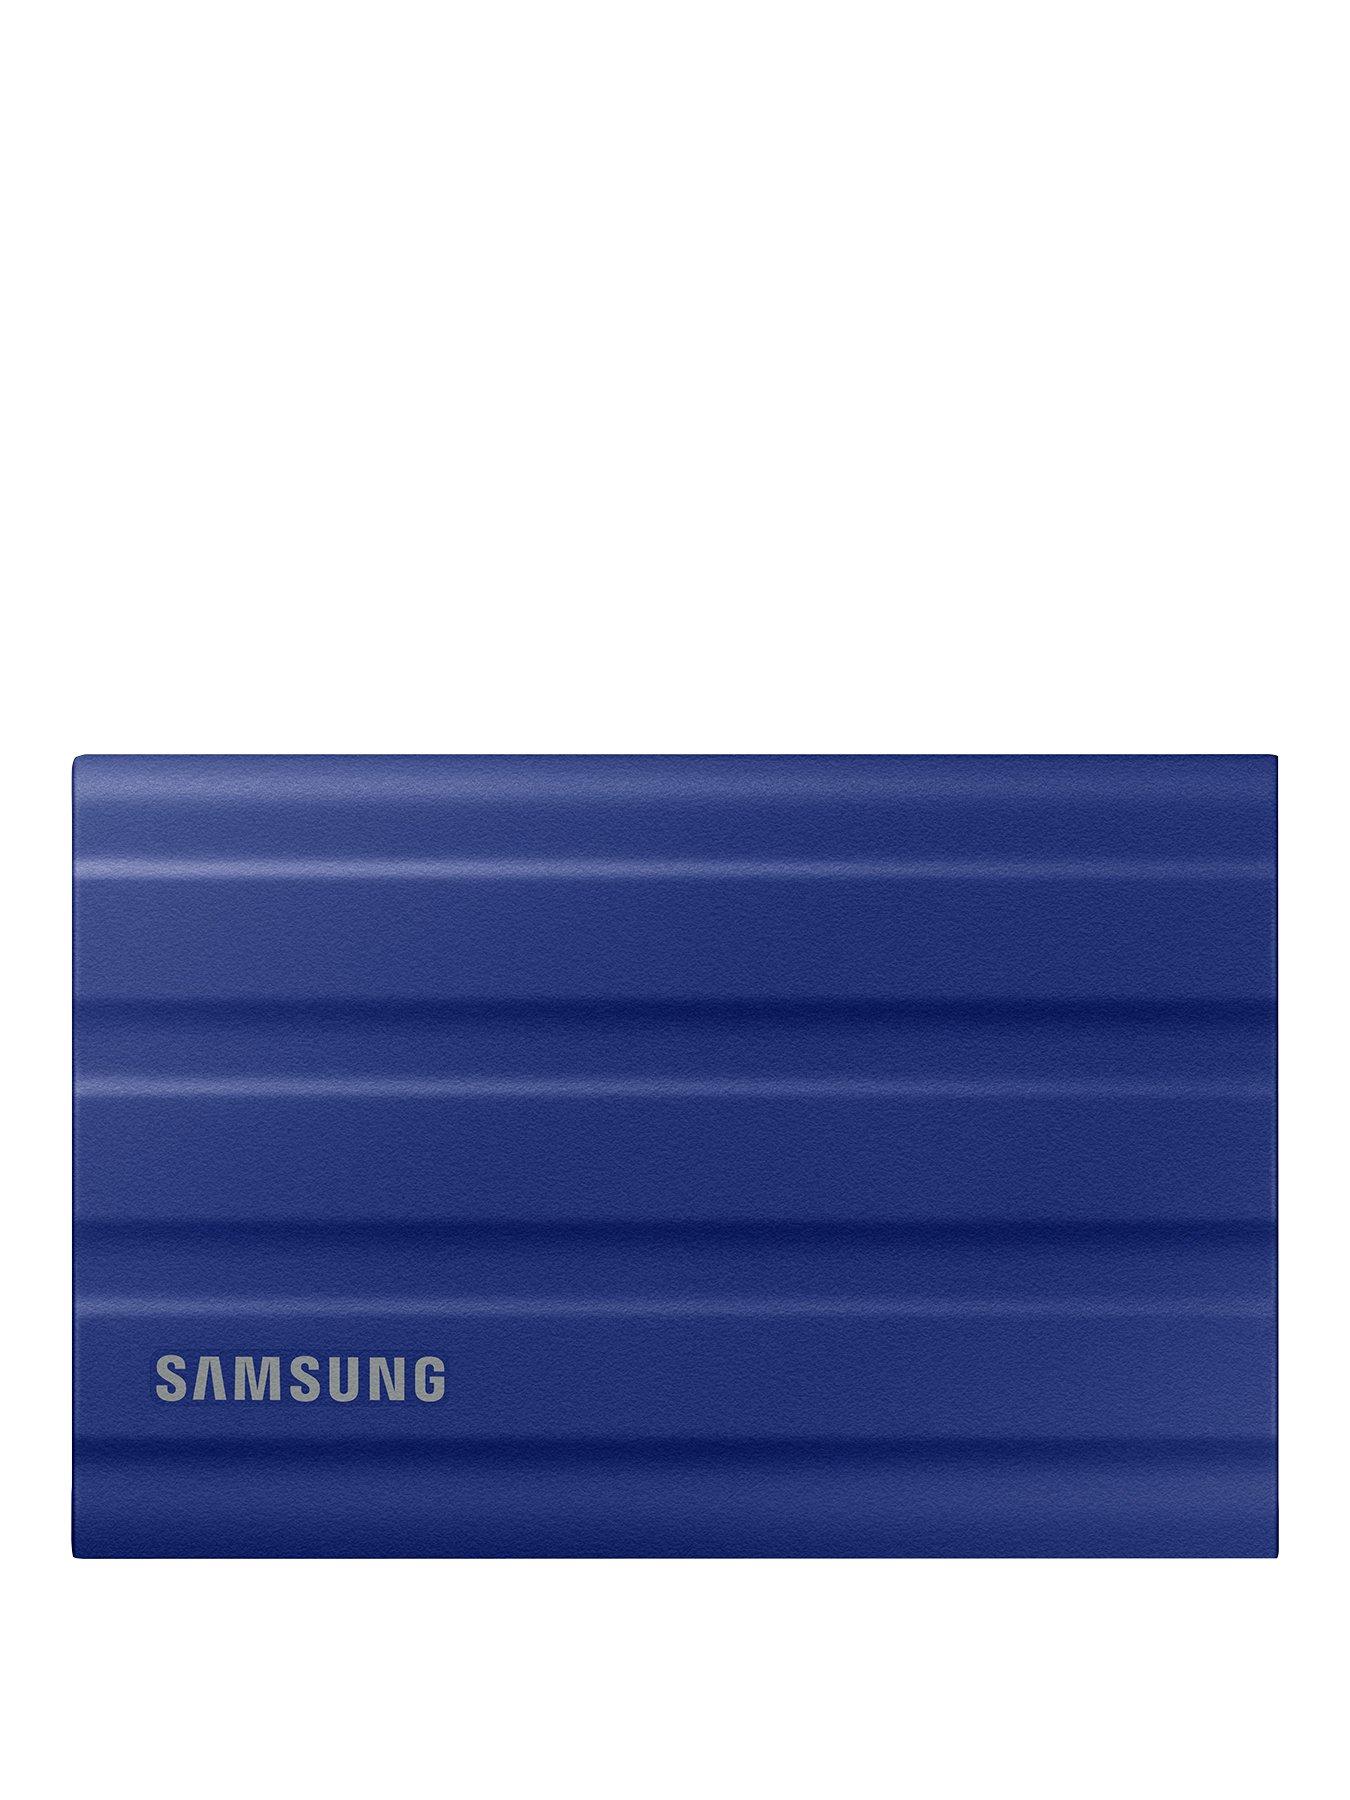 The Elegant Samsung T7 SSD